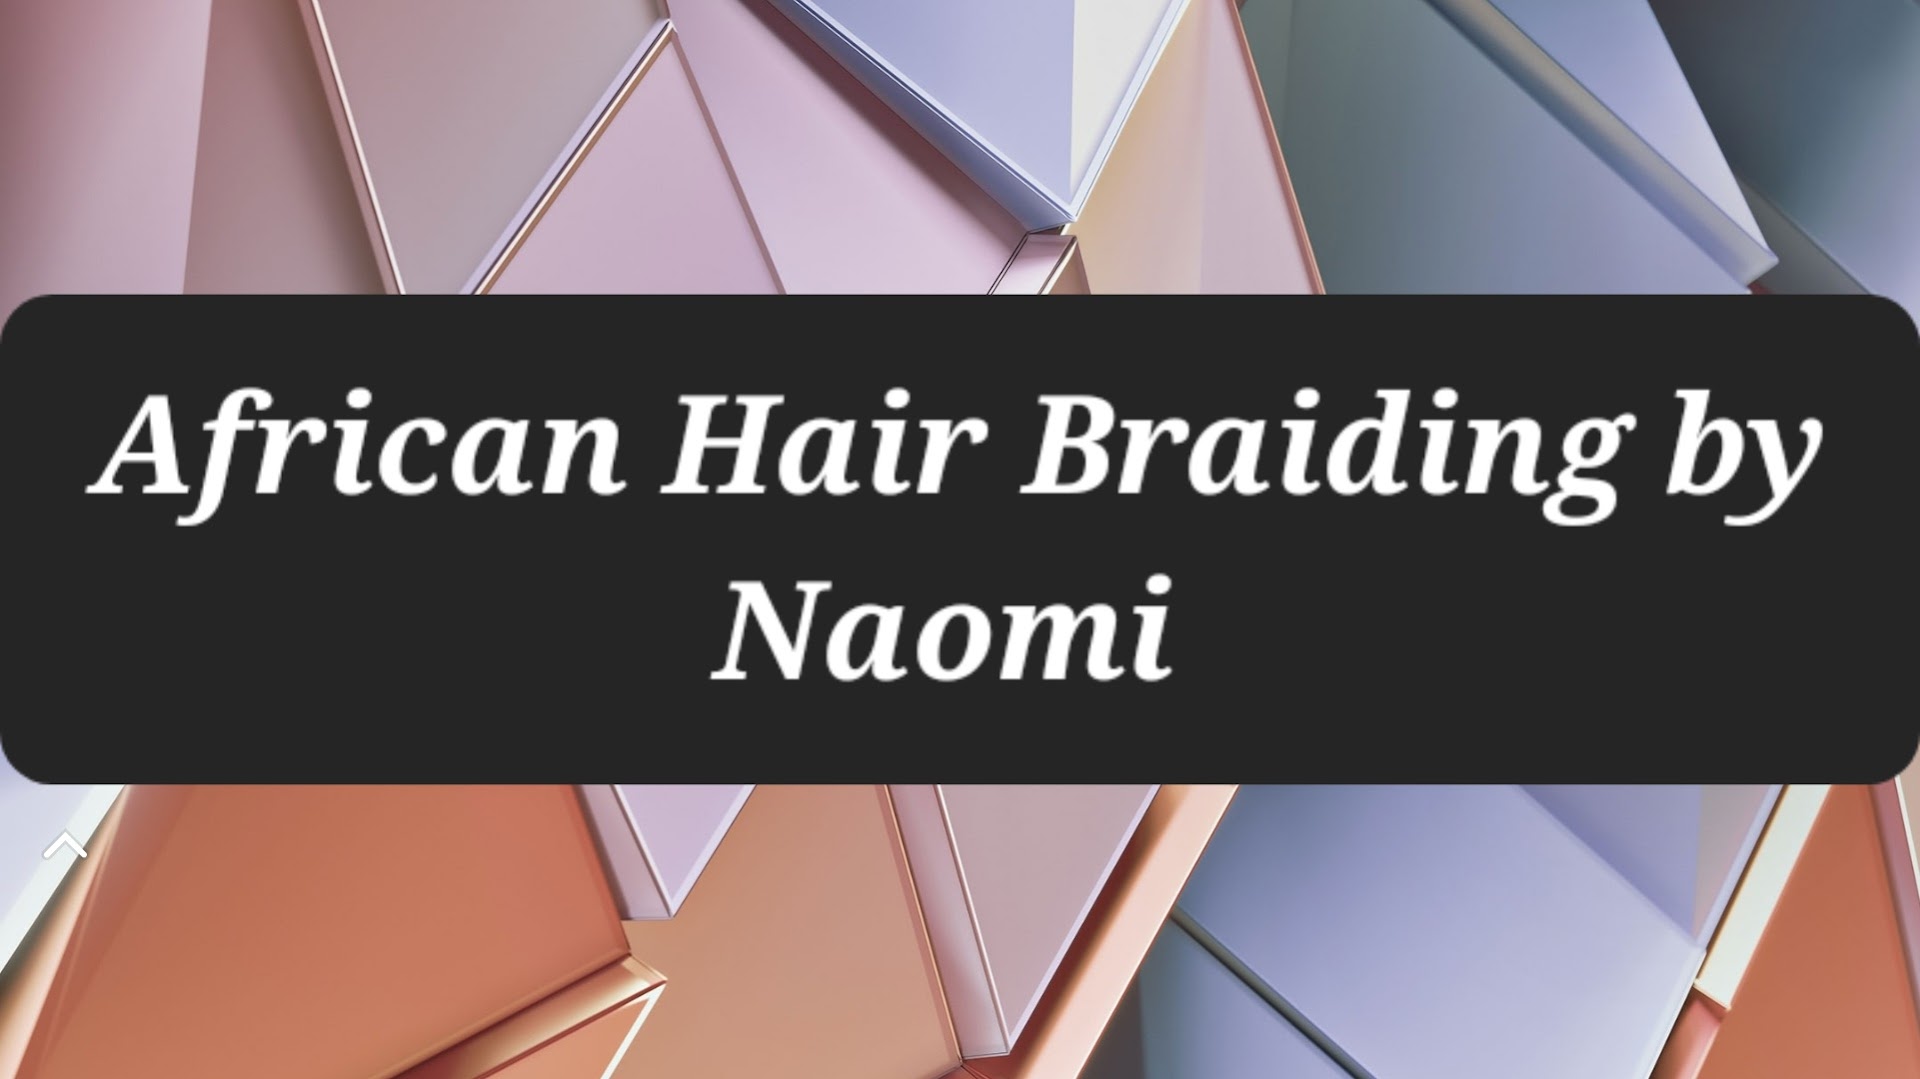 African Hair Braiding by Naomi